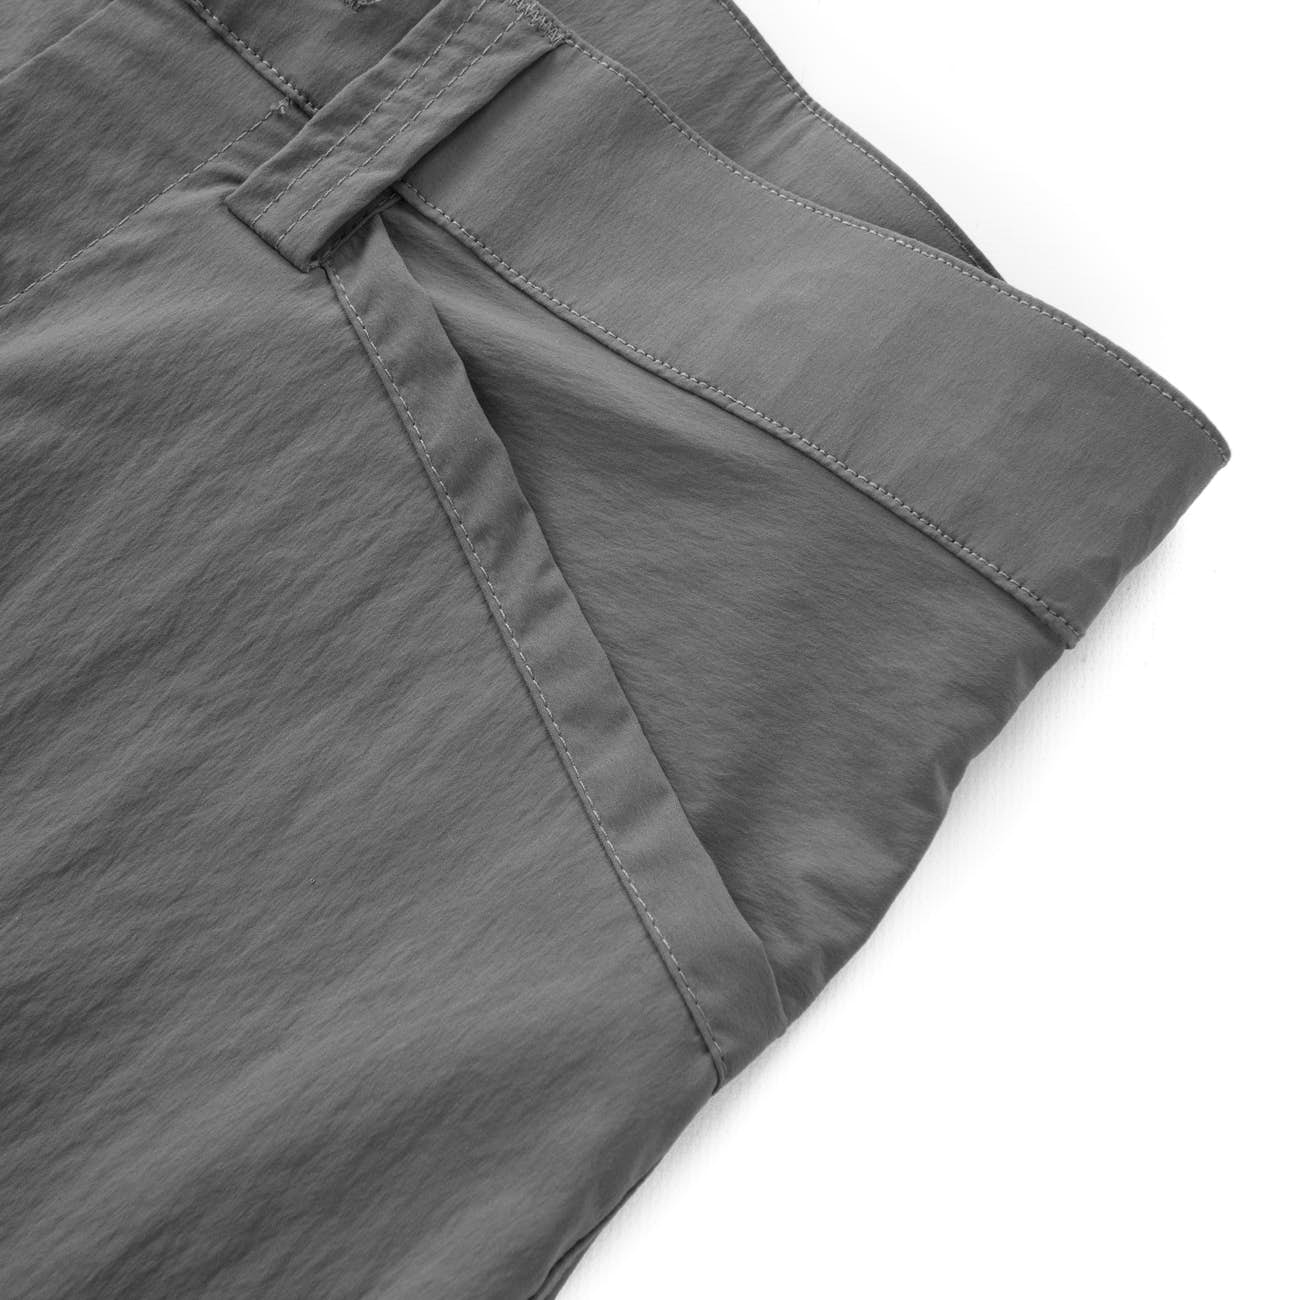 goruck simple pants corner